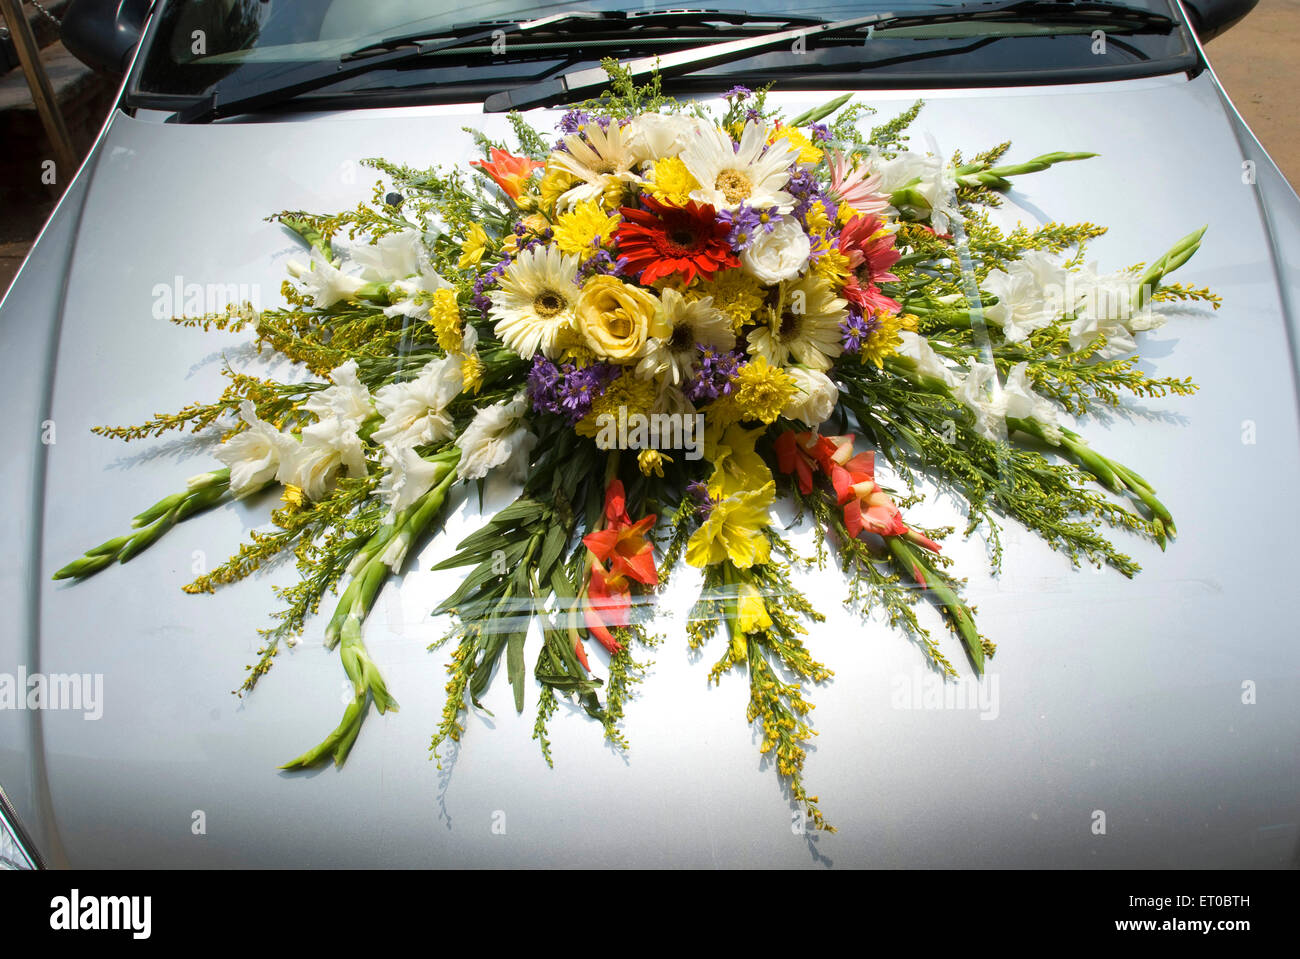 16,153 Wedding Car Decoration Images, Stock Photos, 3D objects, & Vectors